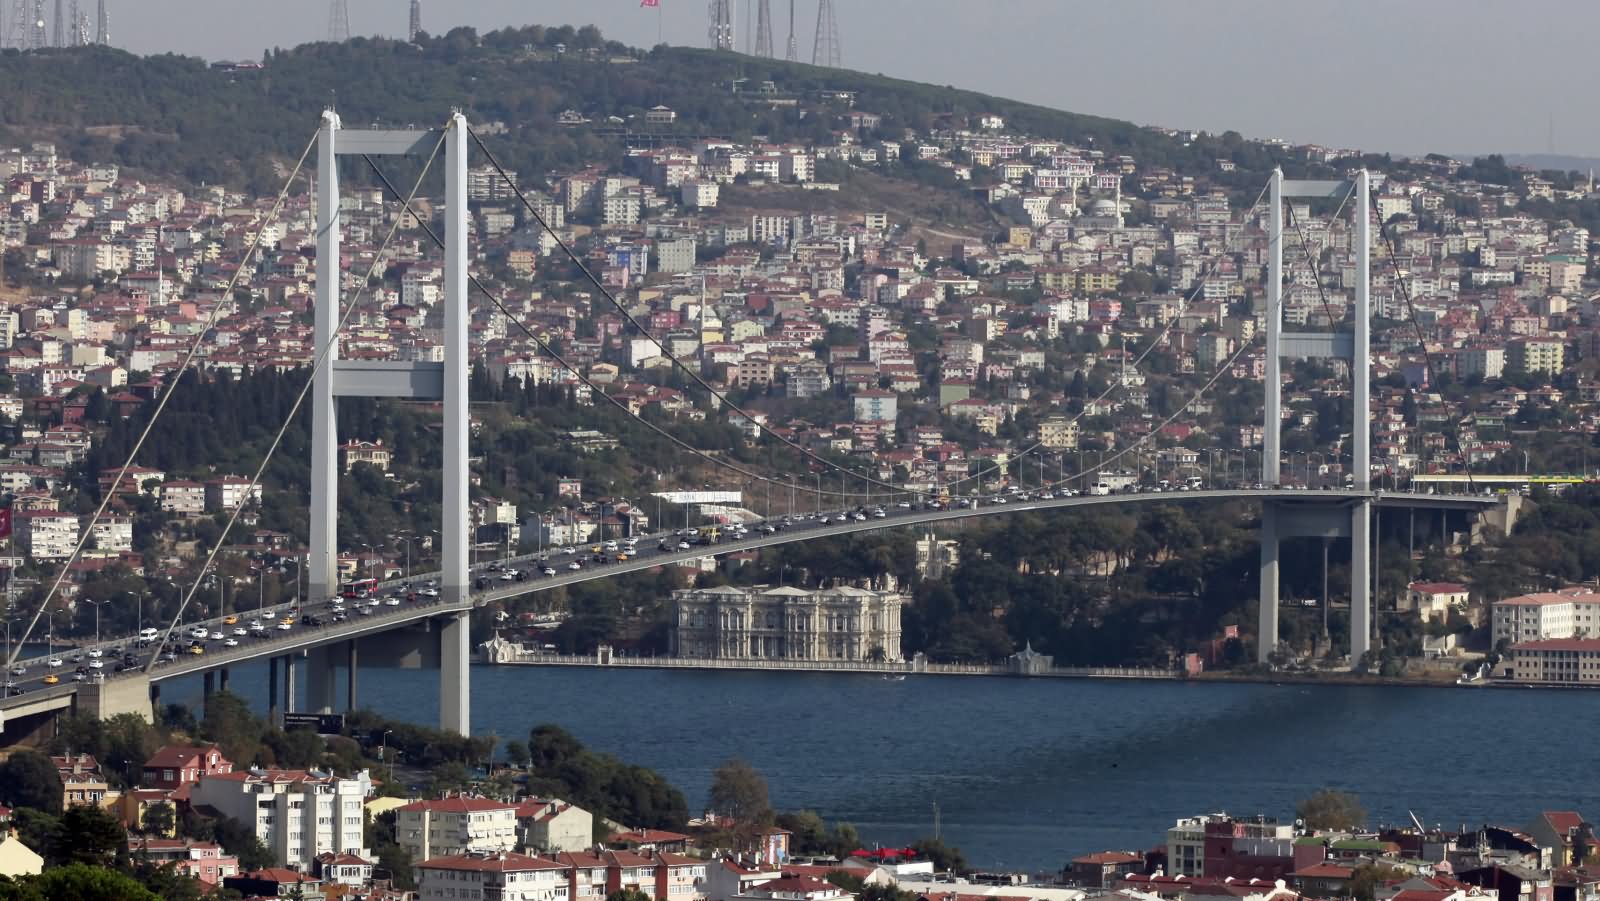 A View Of The Bosphorus Bridge In Istanbul, Turkey